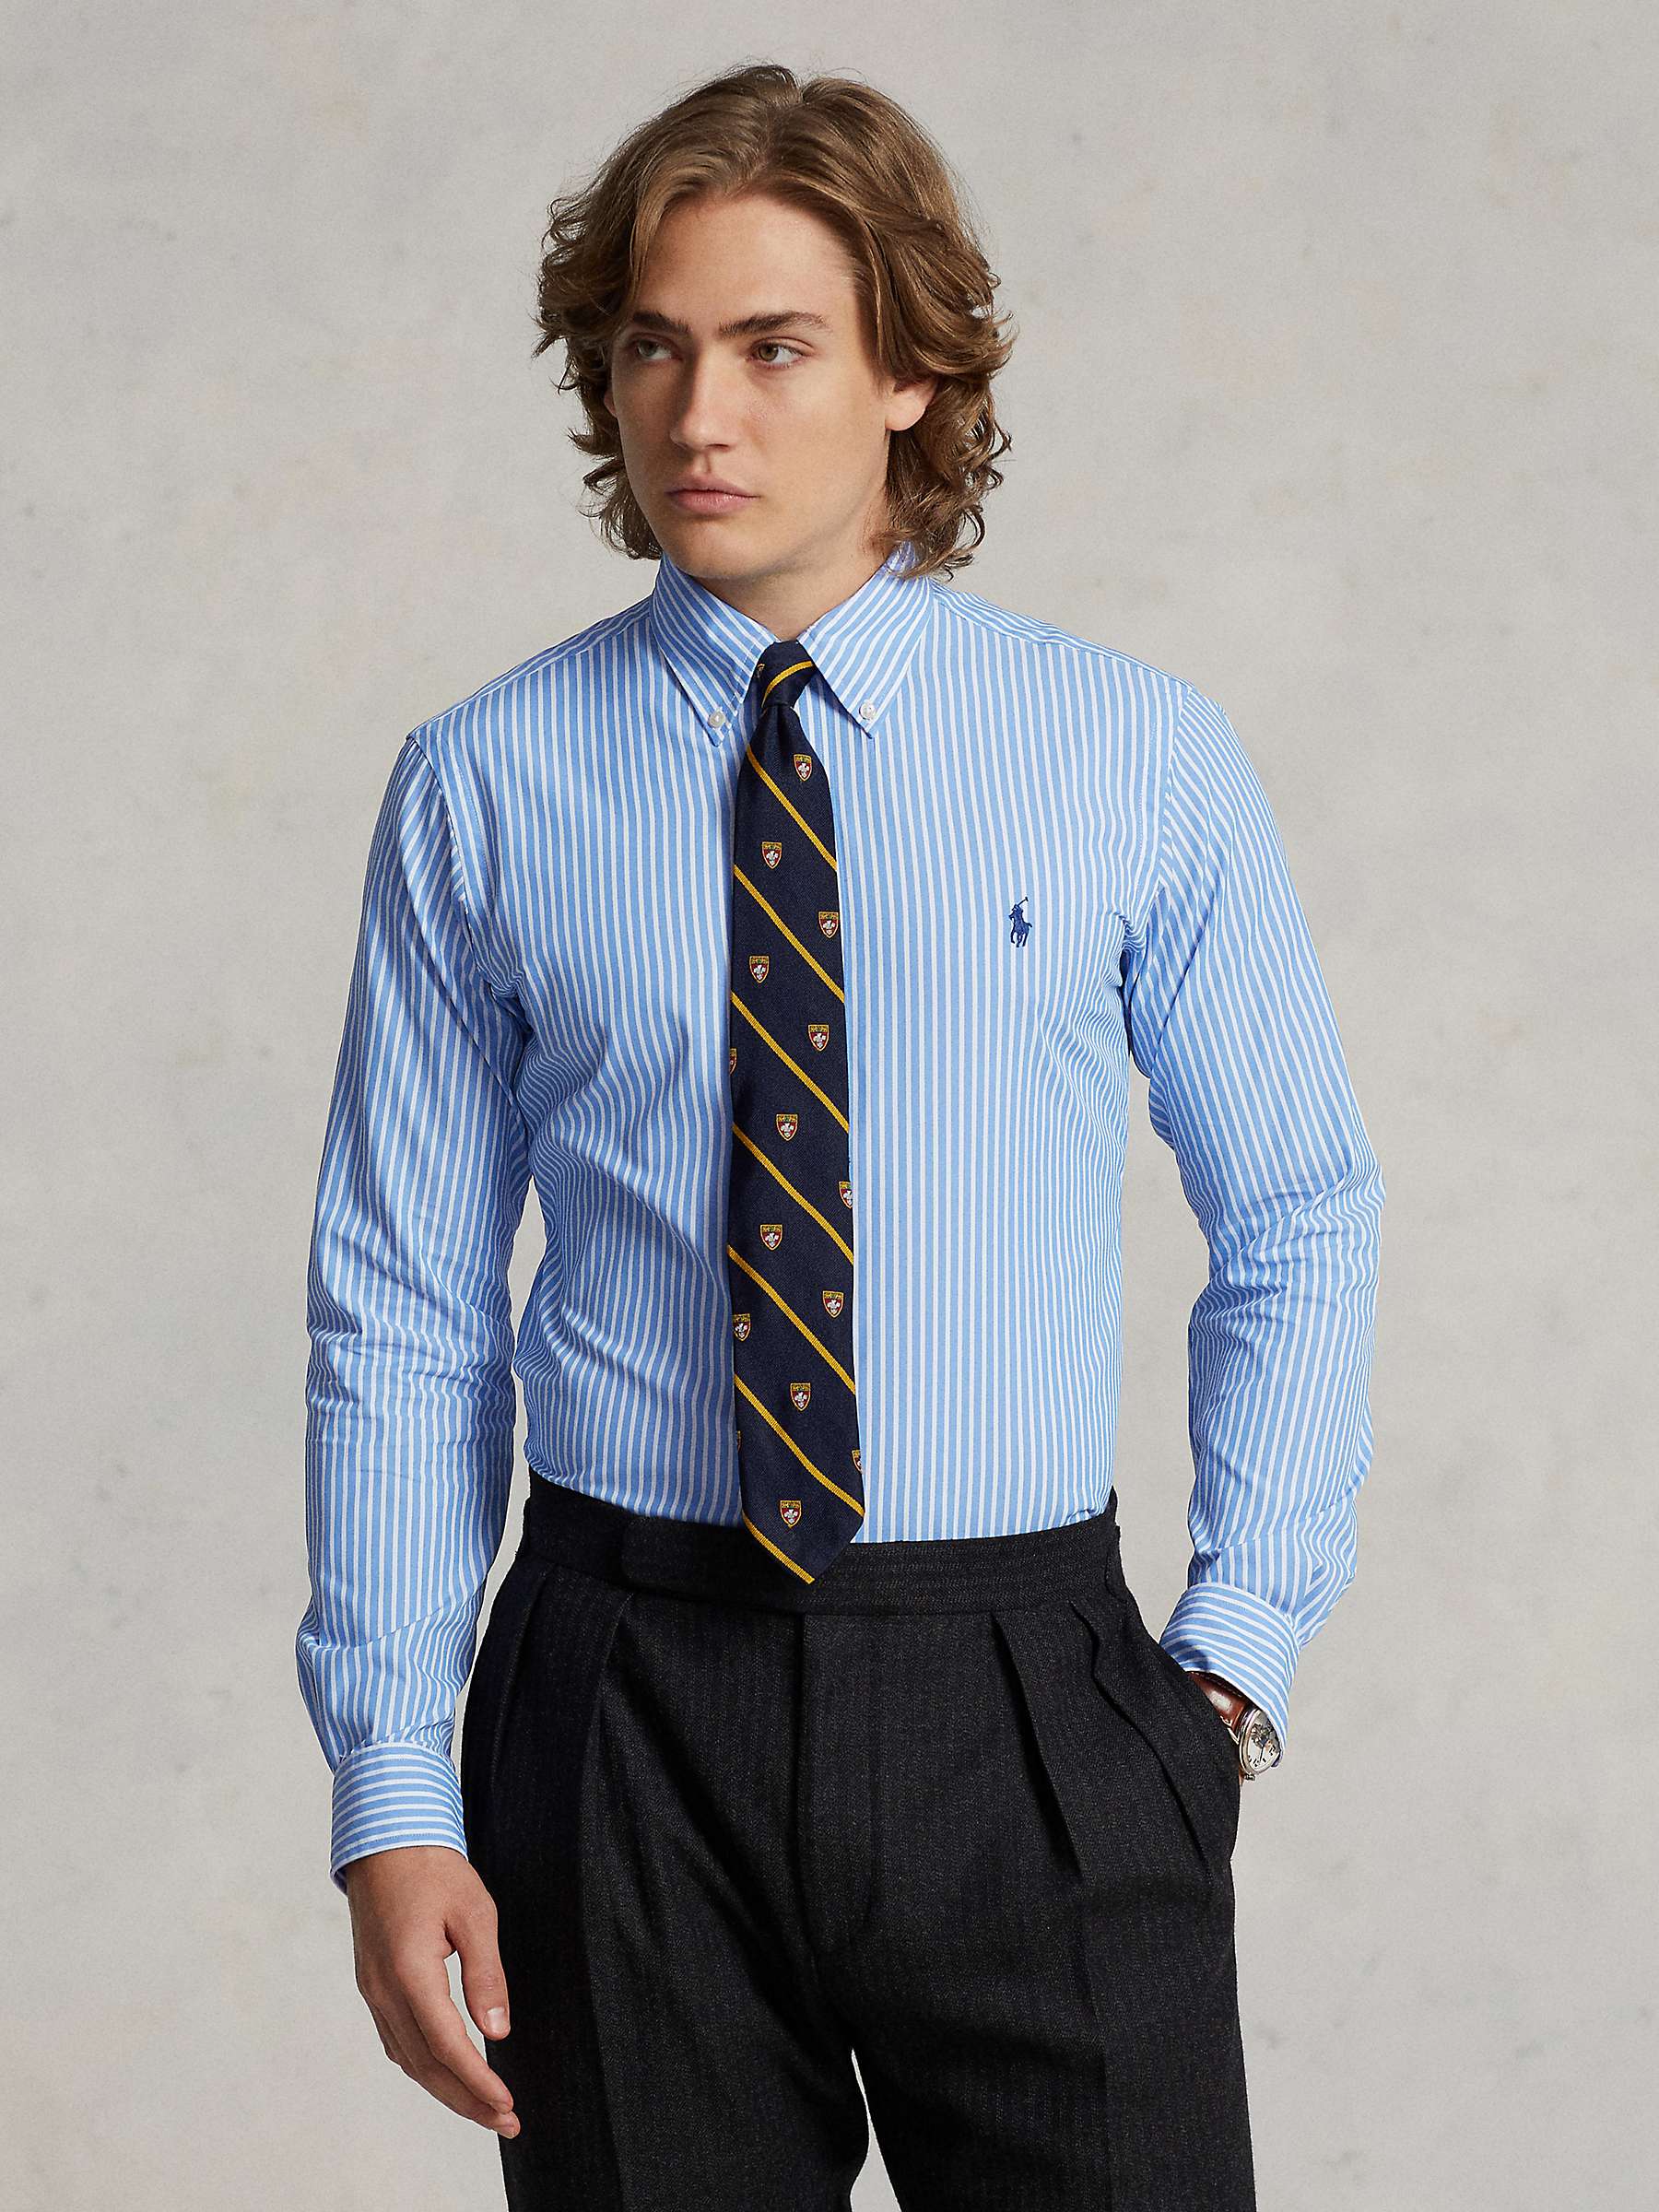 Buy Ralph Lauren Long Sleeve Stripe Shirt, Blue/White Online at johnlewis.com